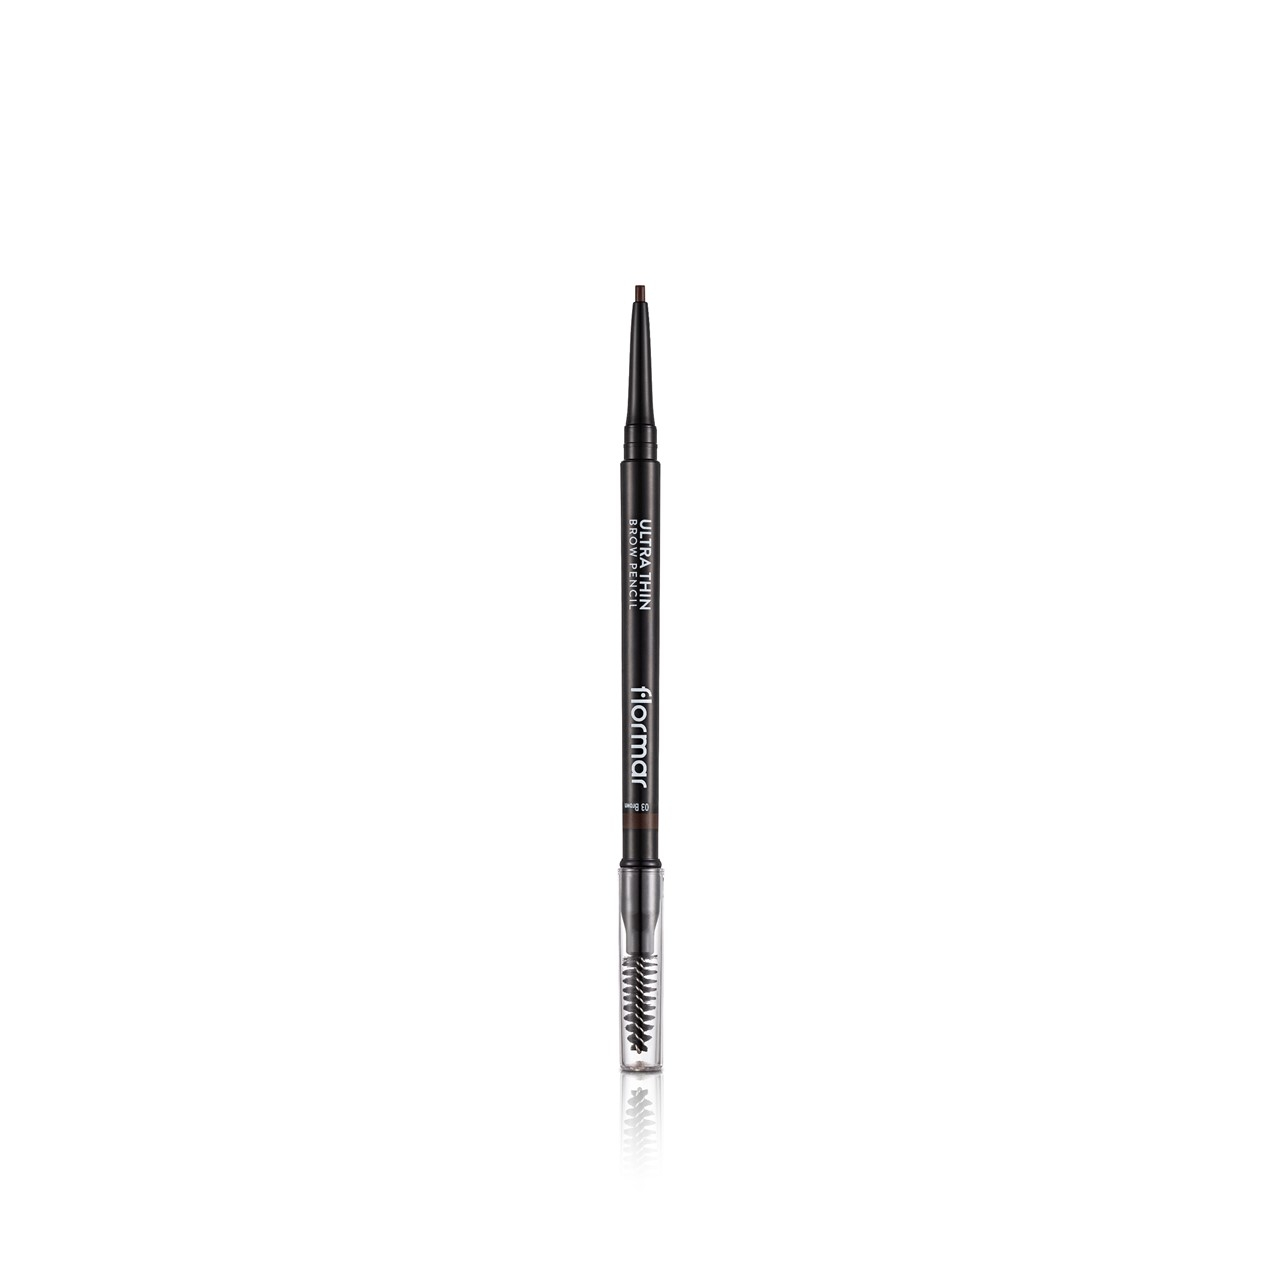 Flormar Ultra Thin Brow Pencil 03 Brown 0.14g (0.005oz)